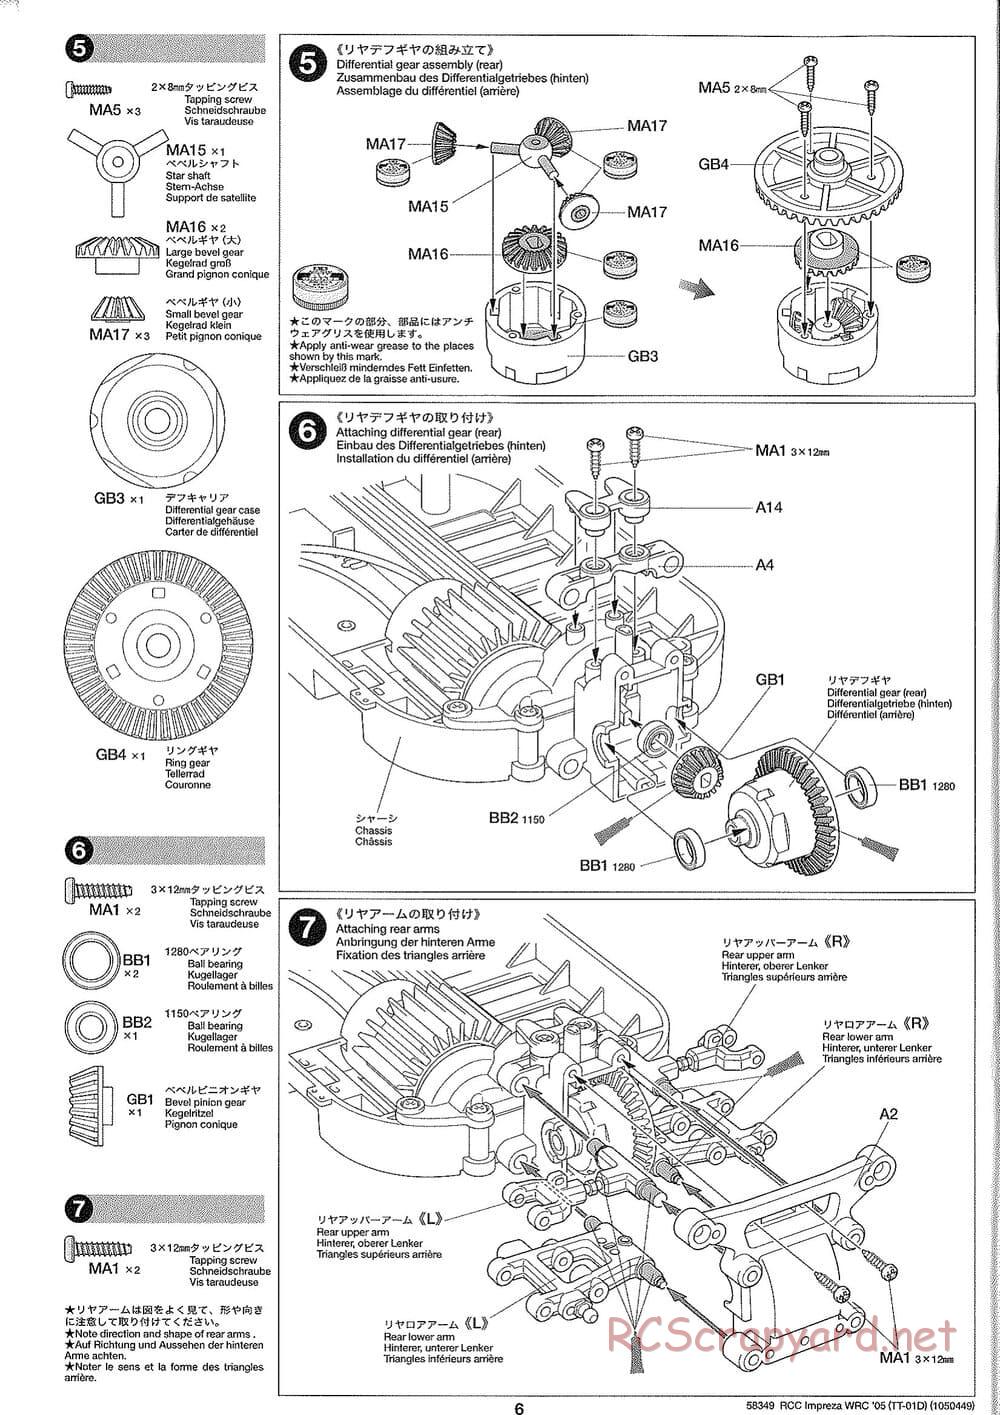 Tamiya - Subaru Impreza WRC Monte Carlo 05 - Drift Spec - TT-01D Chassis - Manual - Page 6